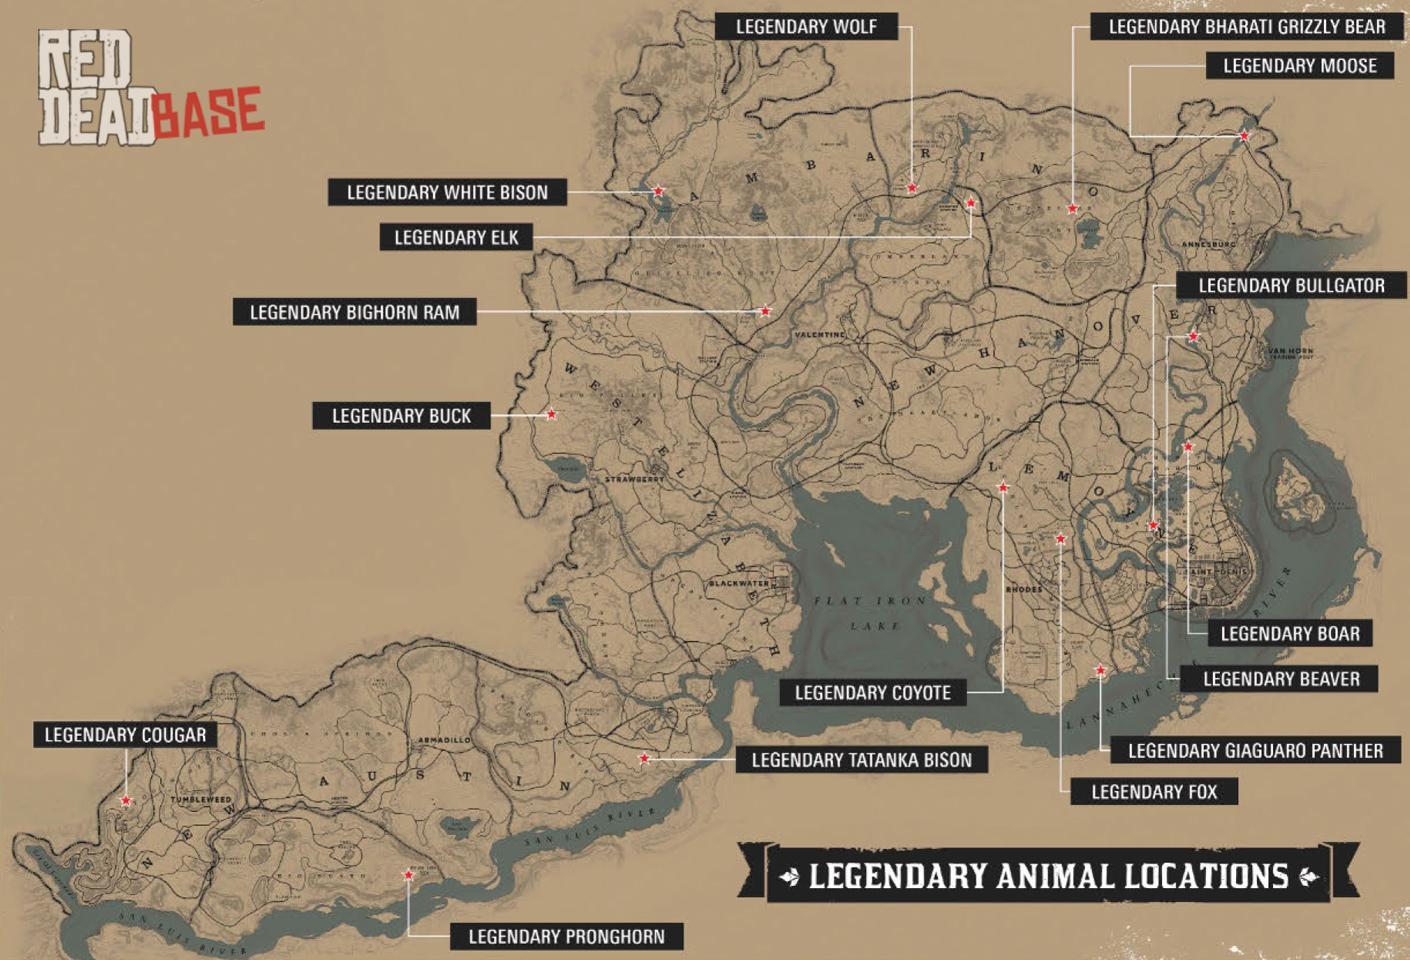 Legendary Buck - Map Location in RDR2